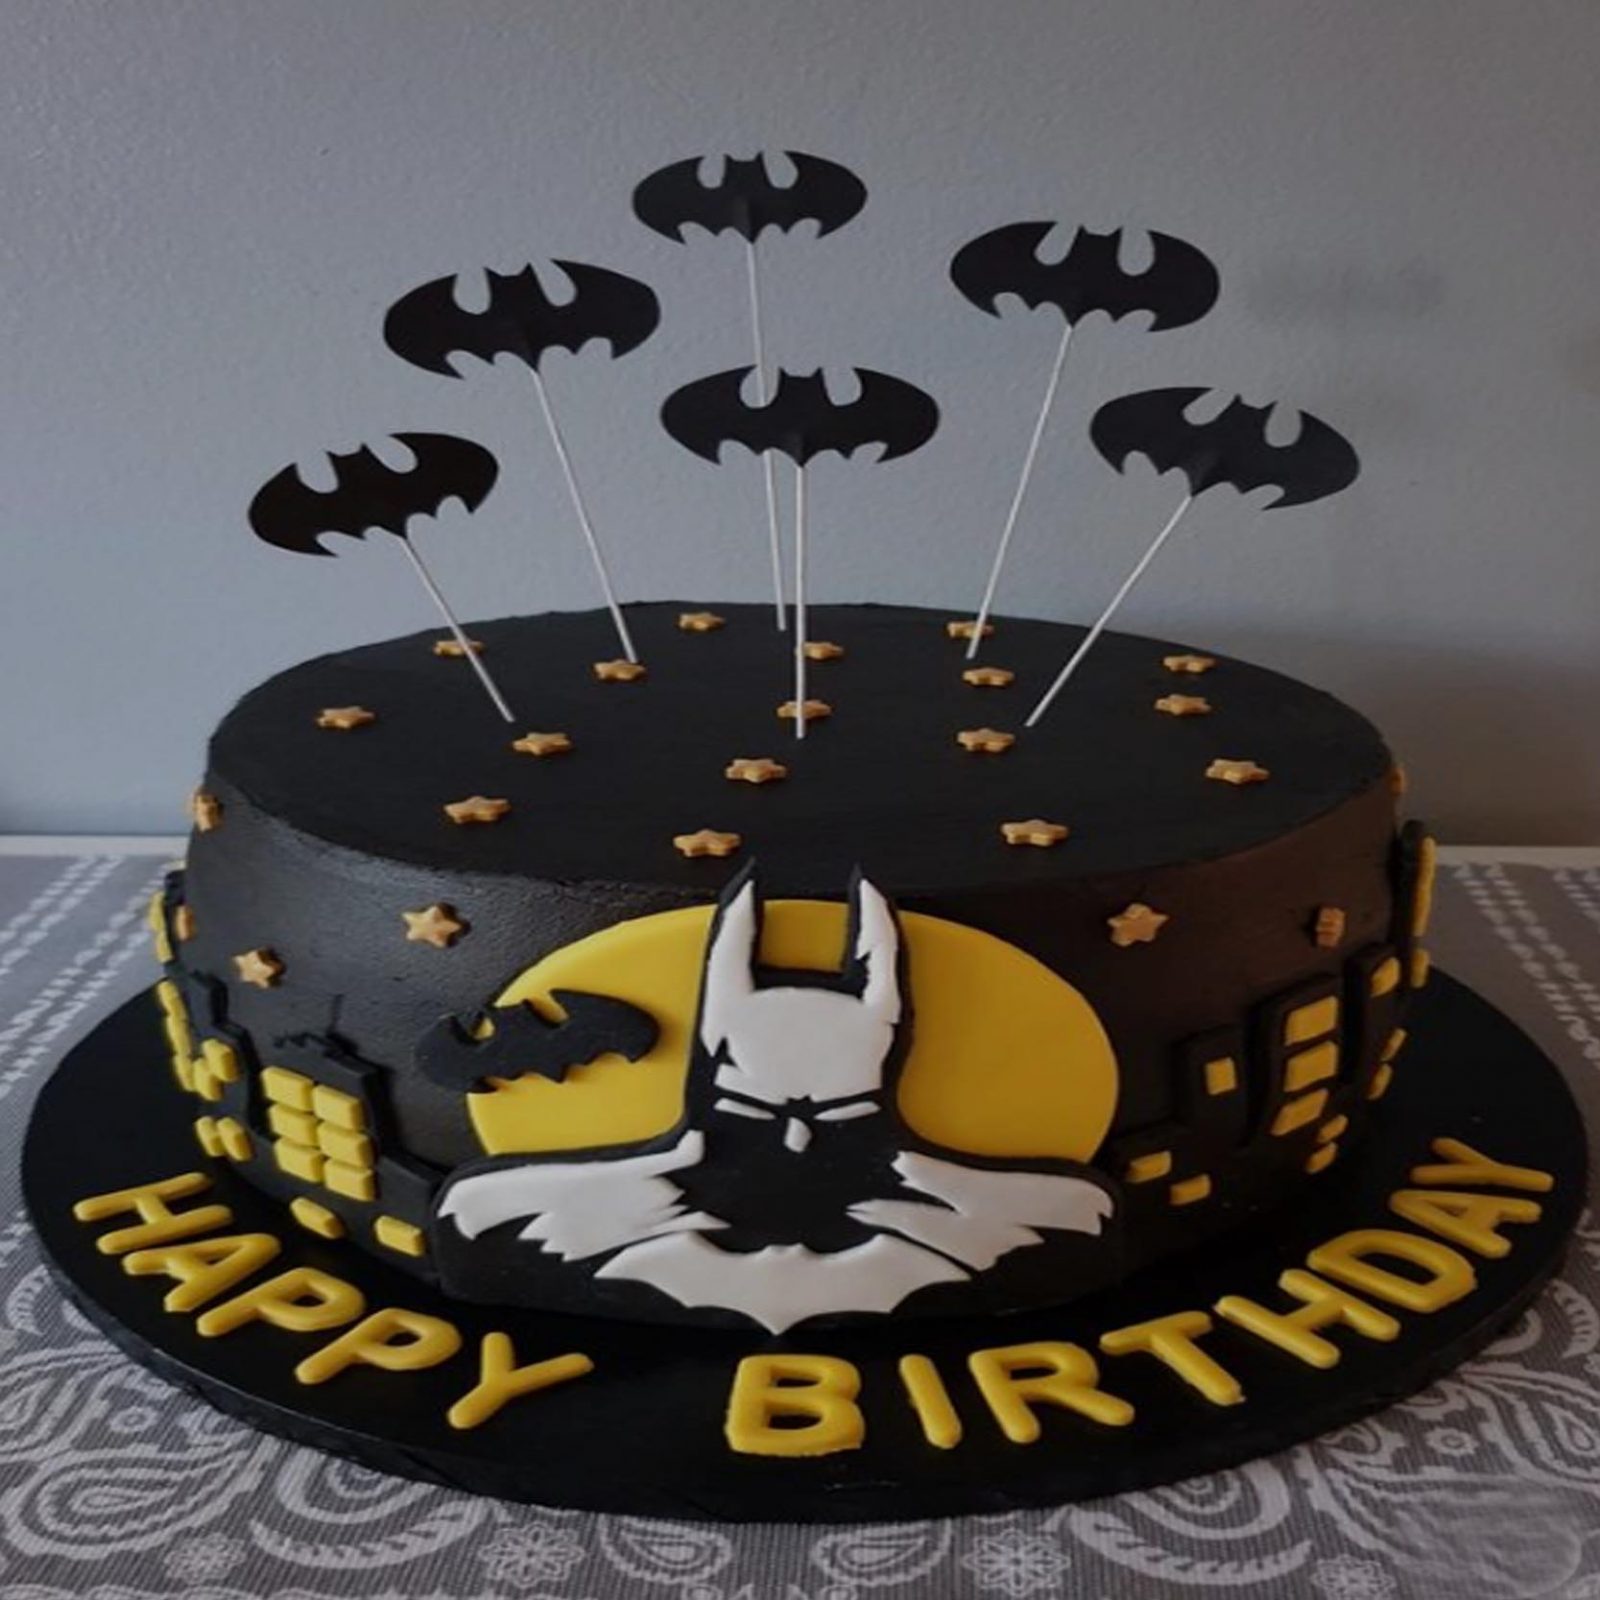 Batman Theme Birthday Cake | The Custom Seen - Best Birthday Cakes